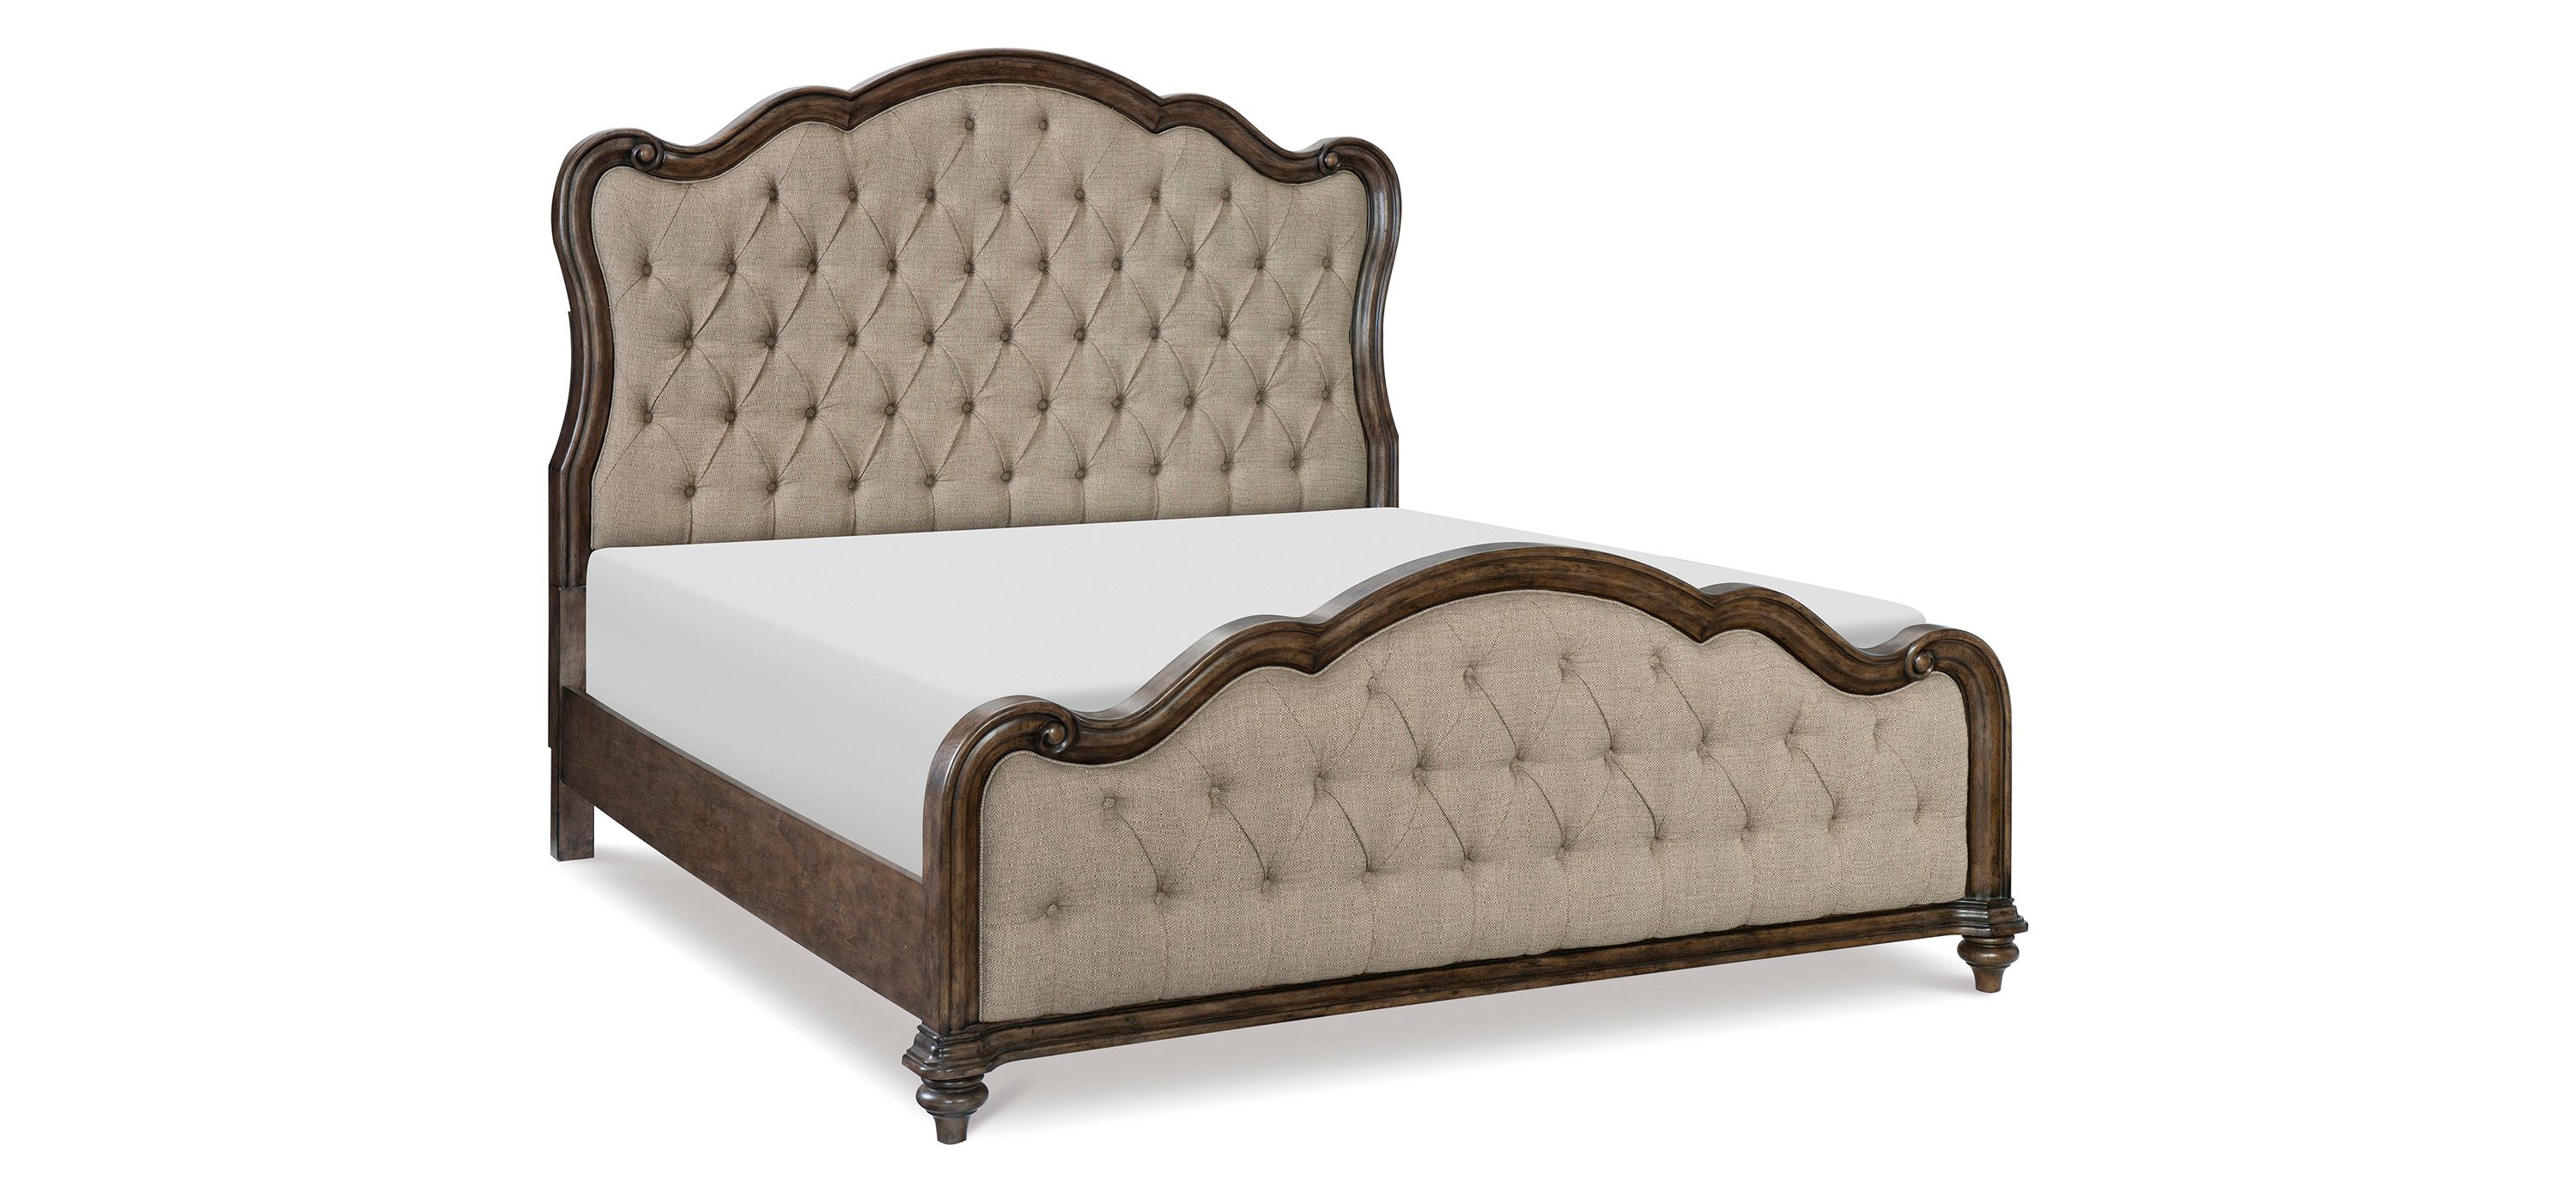 Moorewood Park Upholstered Bed